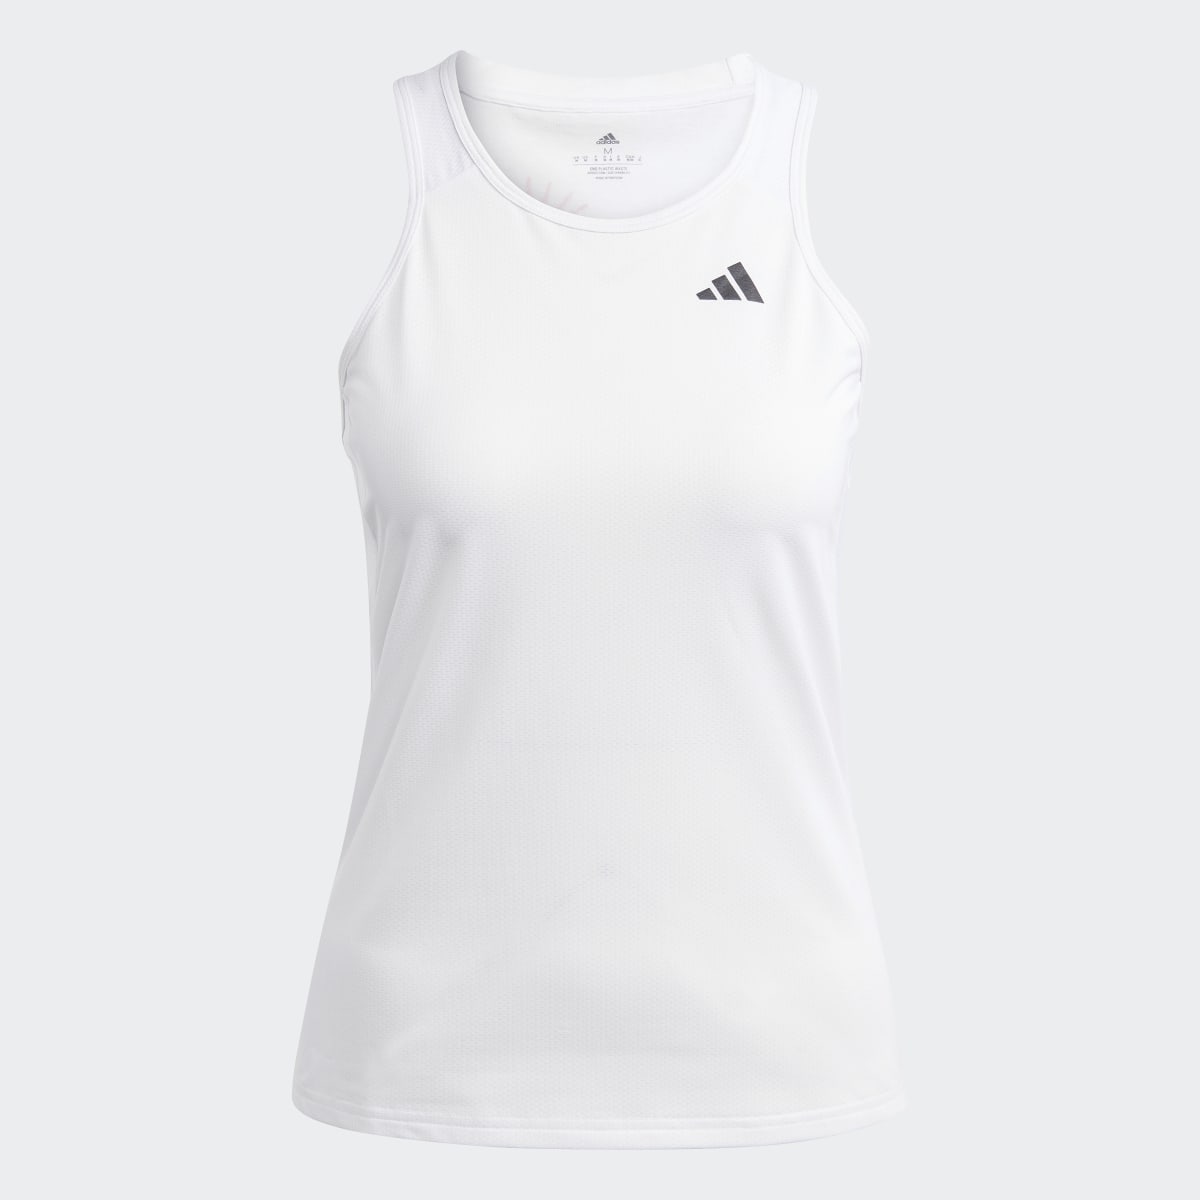 Adidas Camiseta sin mangas Own the Run Running. 5